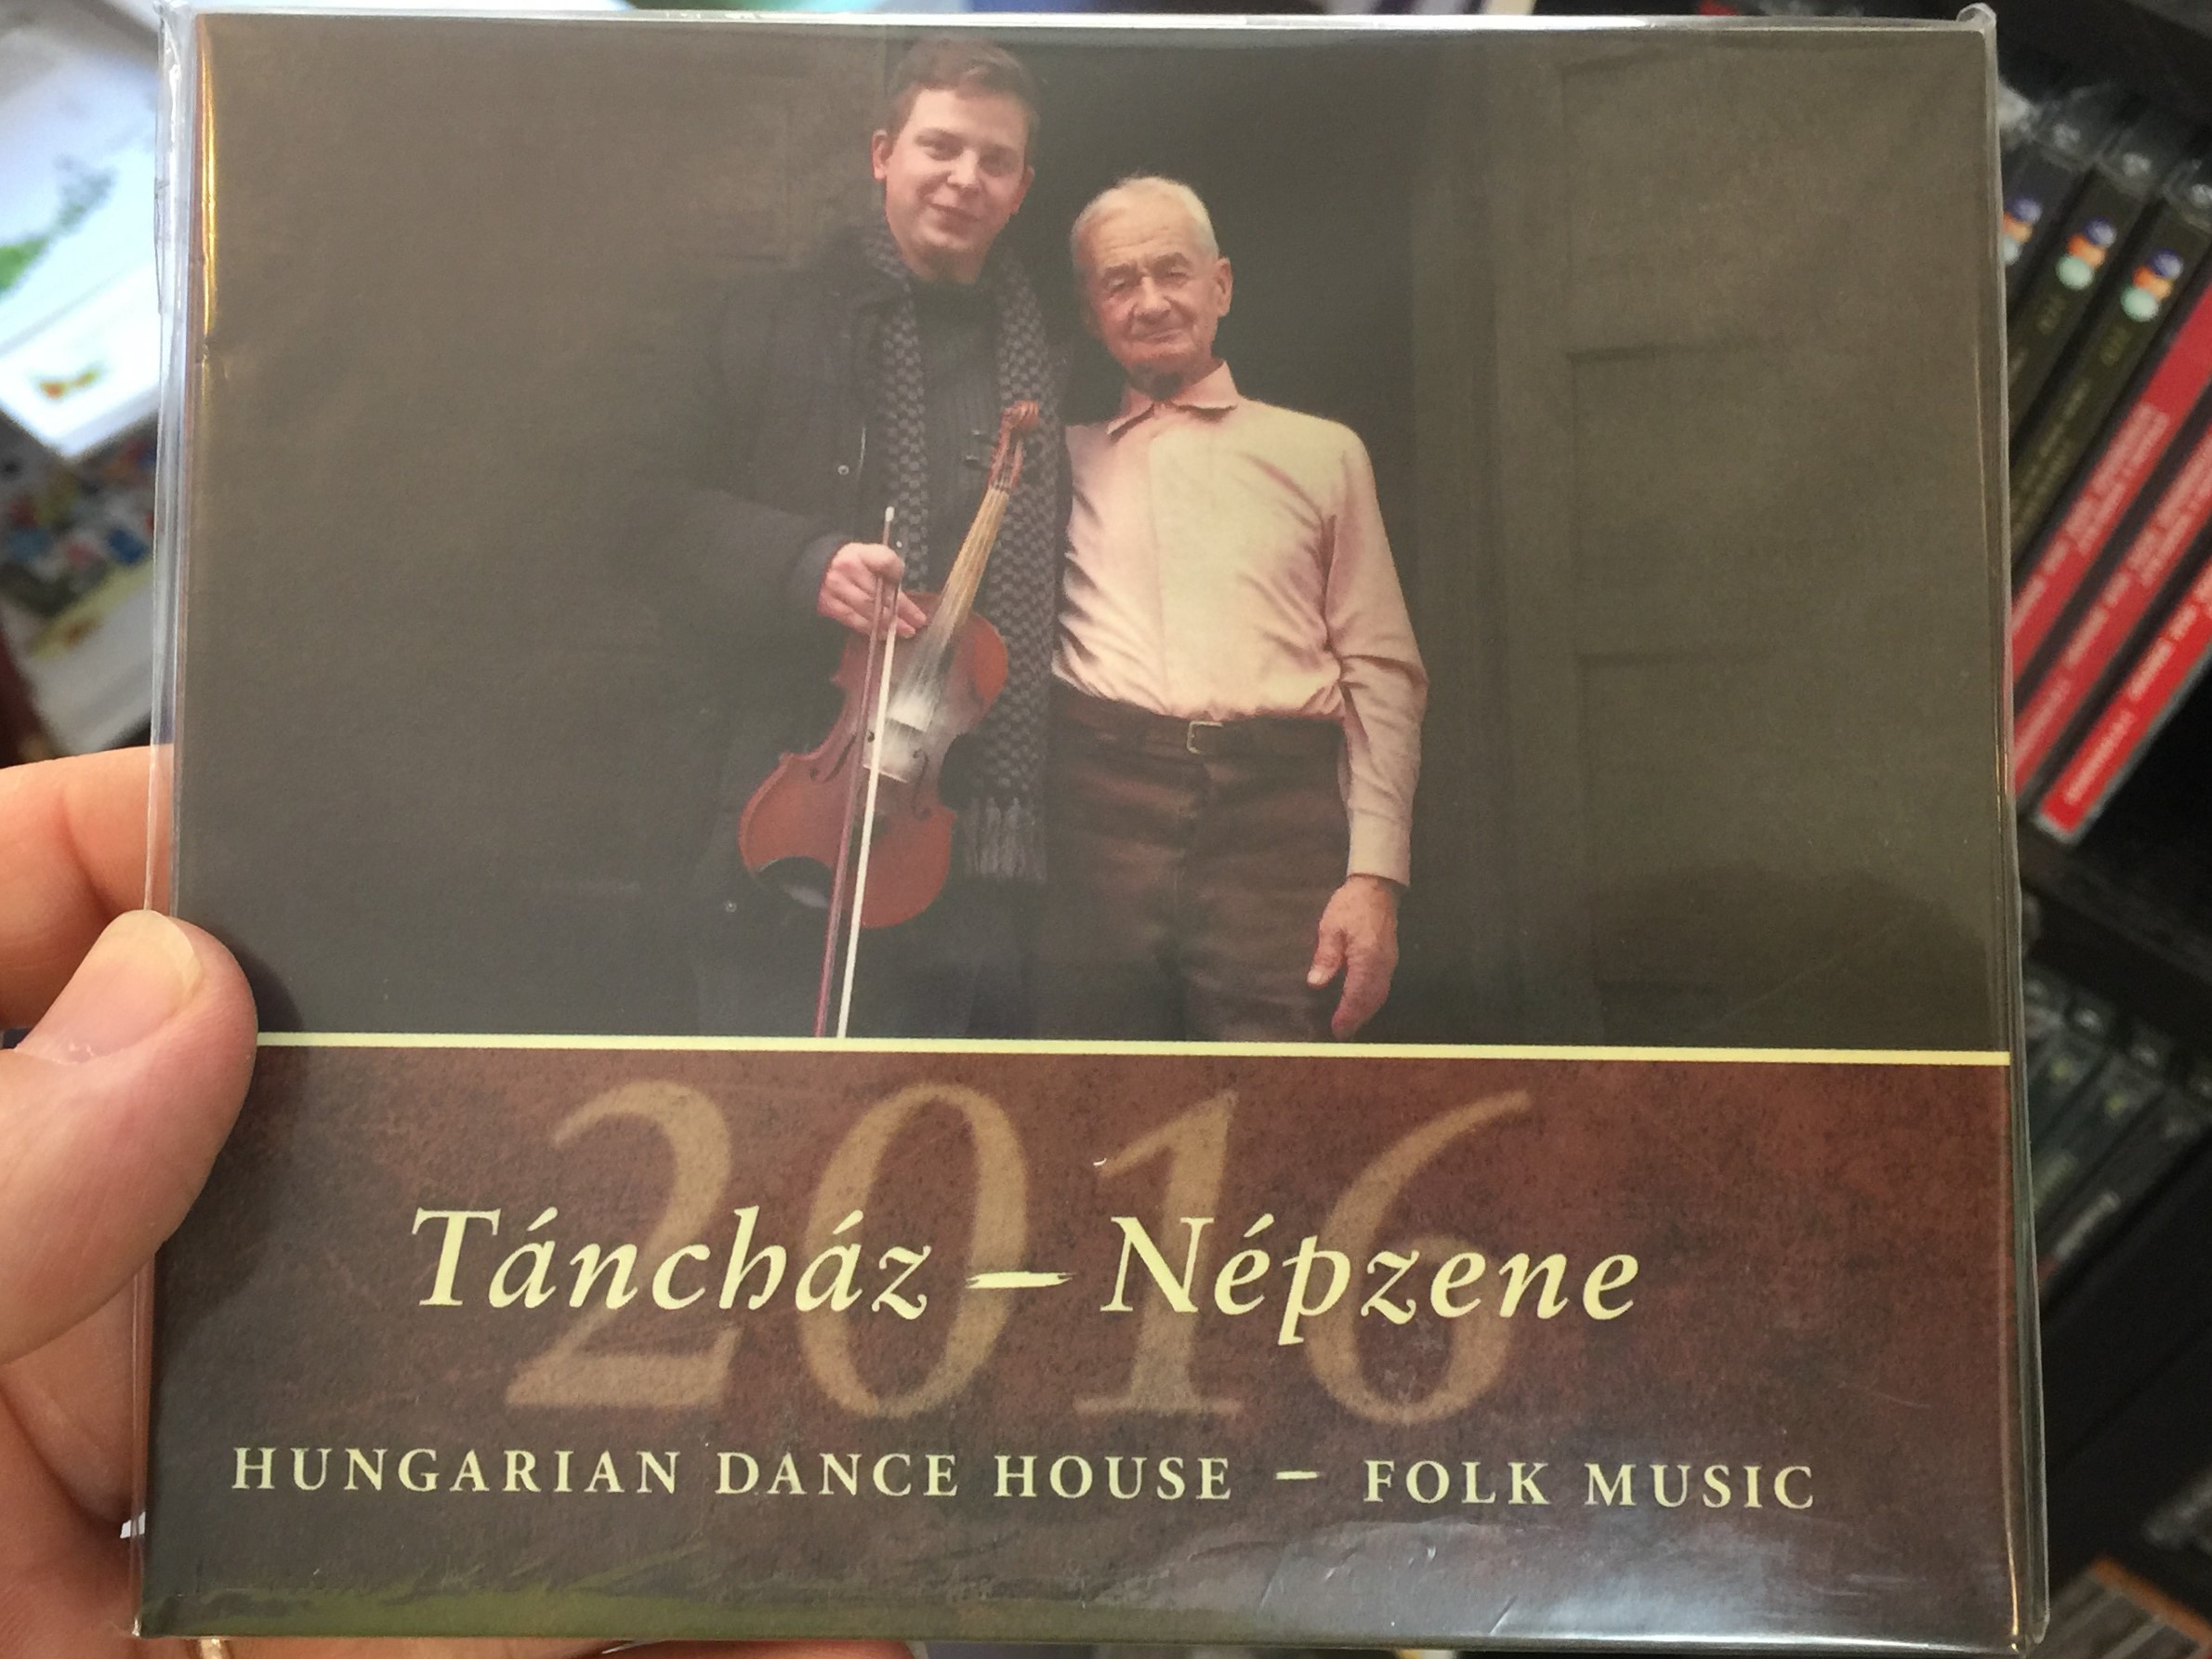 t-nch-z-n-pzene-2016-hungarian-dance-house-folk-music-hagyom-nyok-h-za-audio-cd-2016-5654875215444-1-.jpg